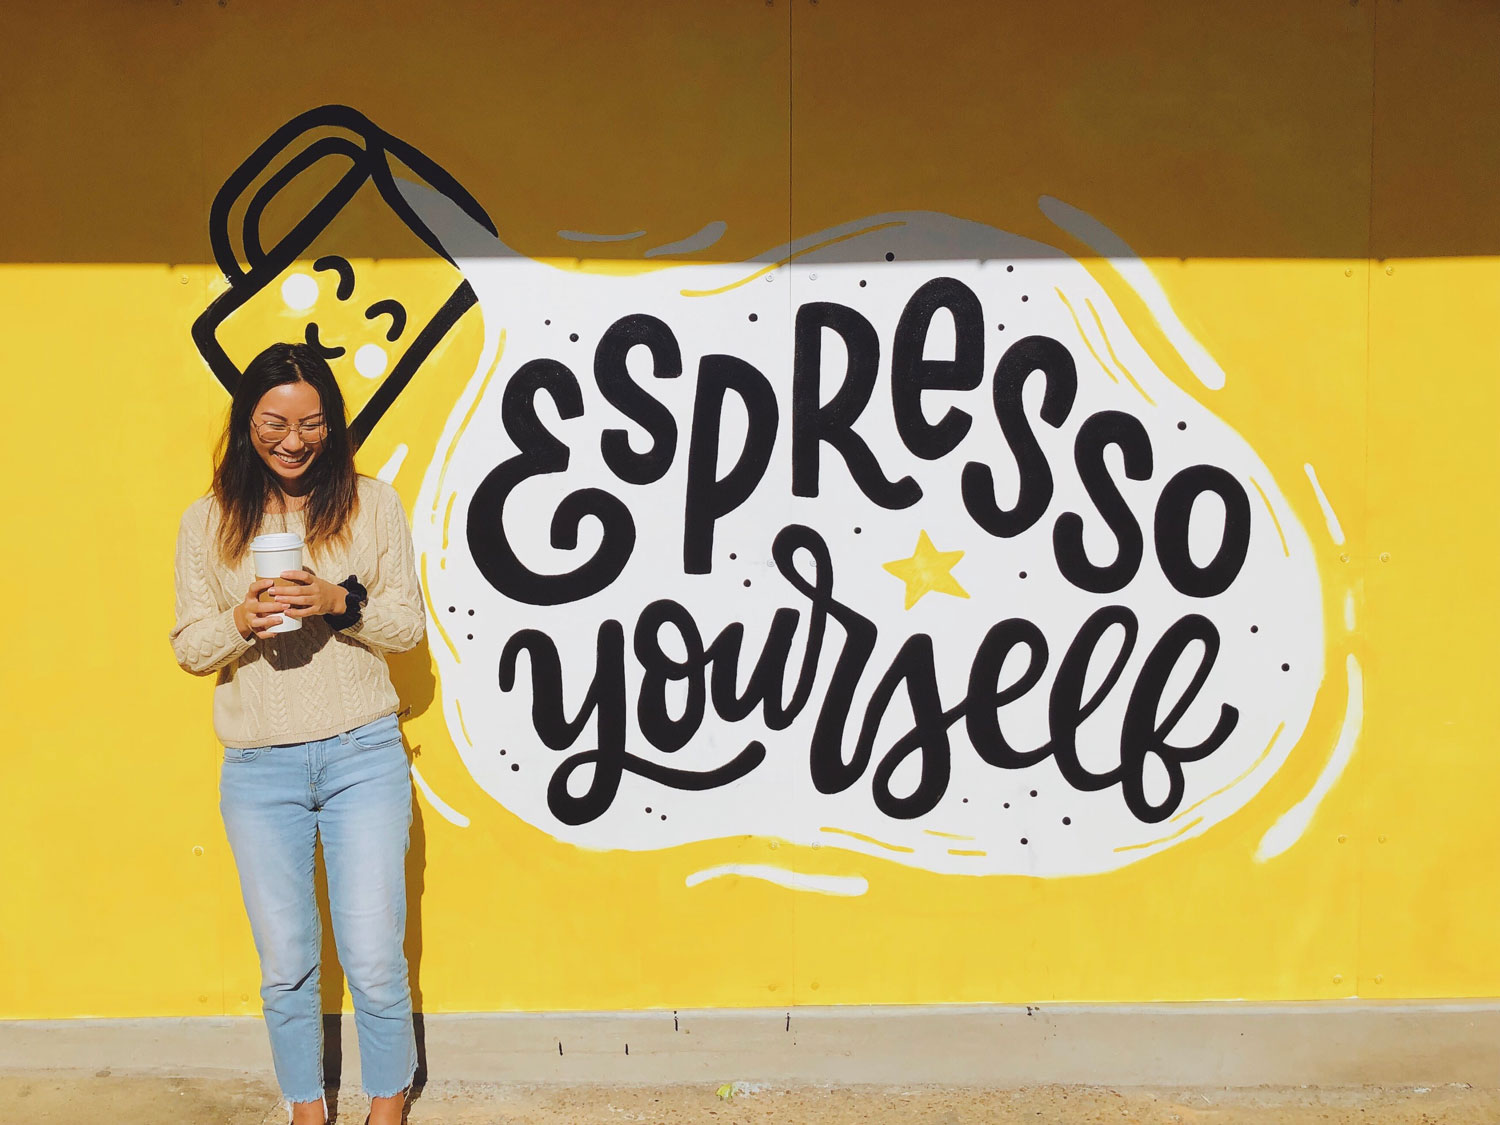 Exterior mural for Austin Java reading "Espresso Yourself"